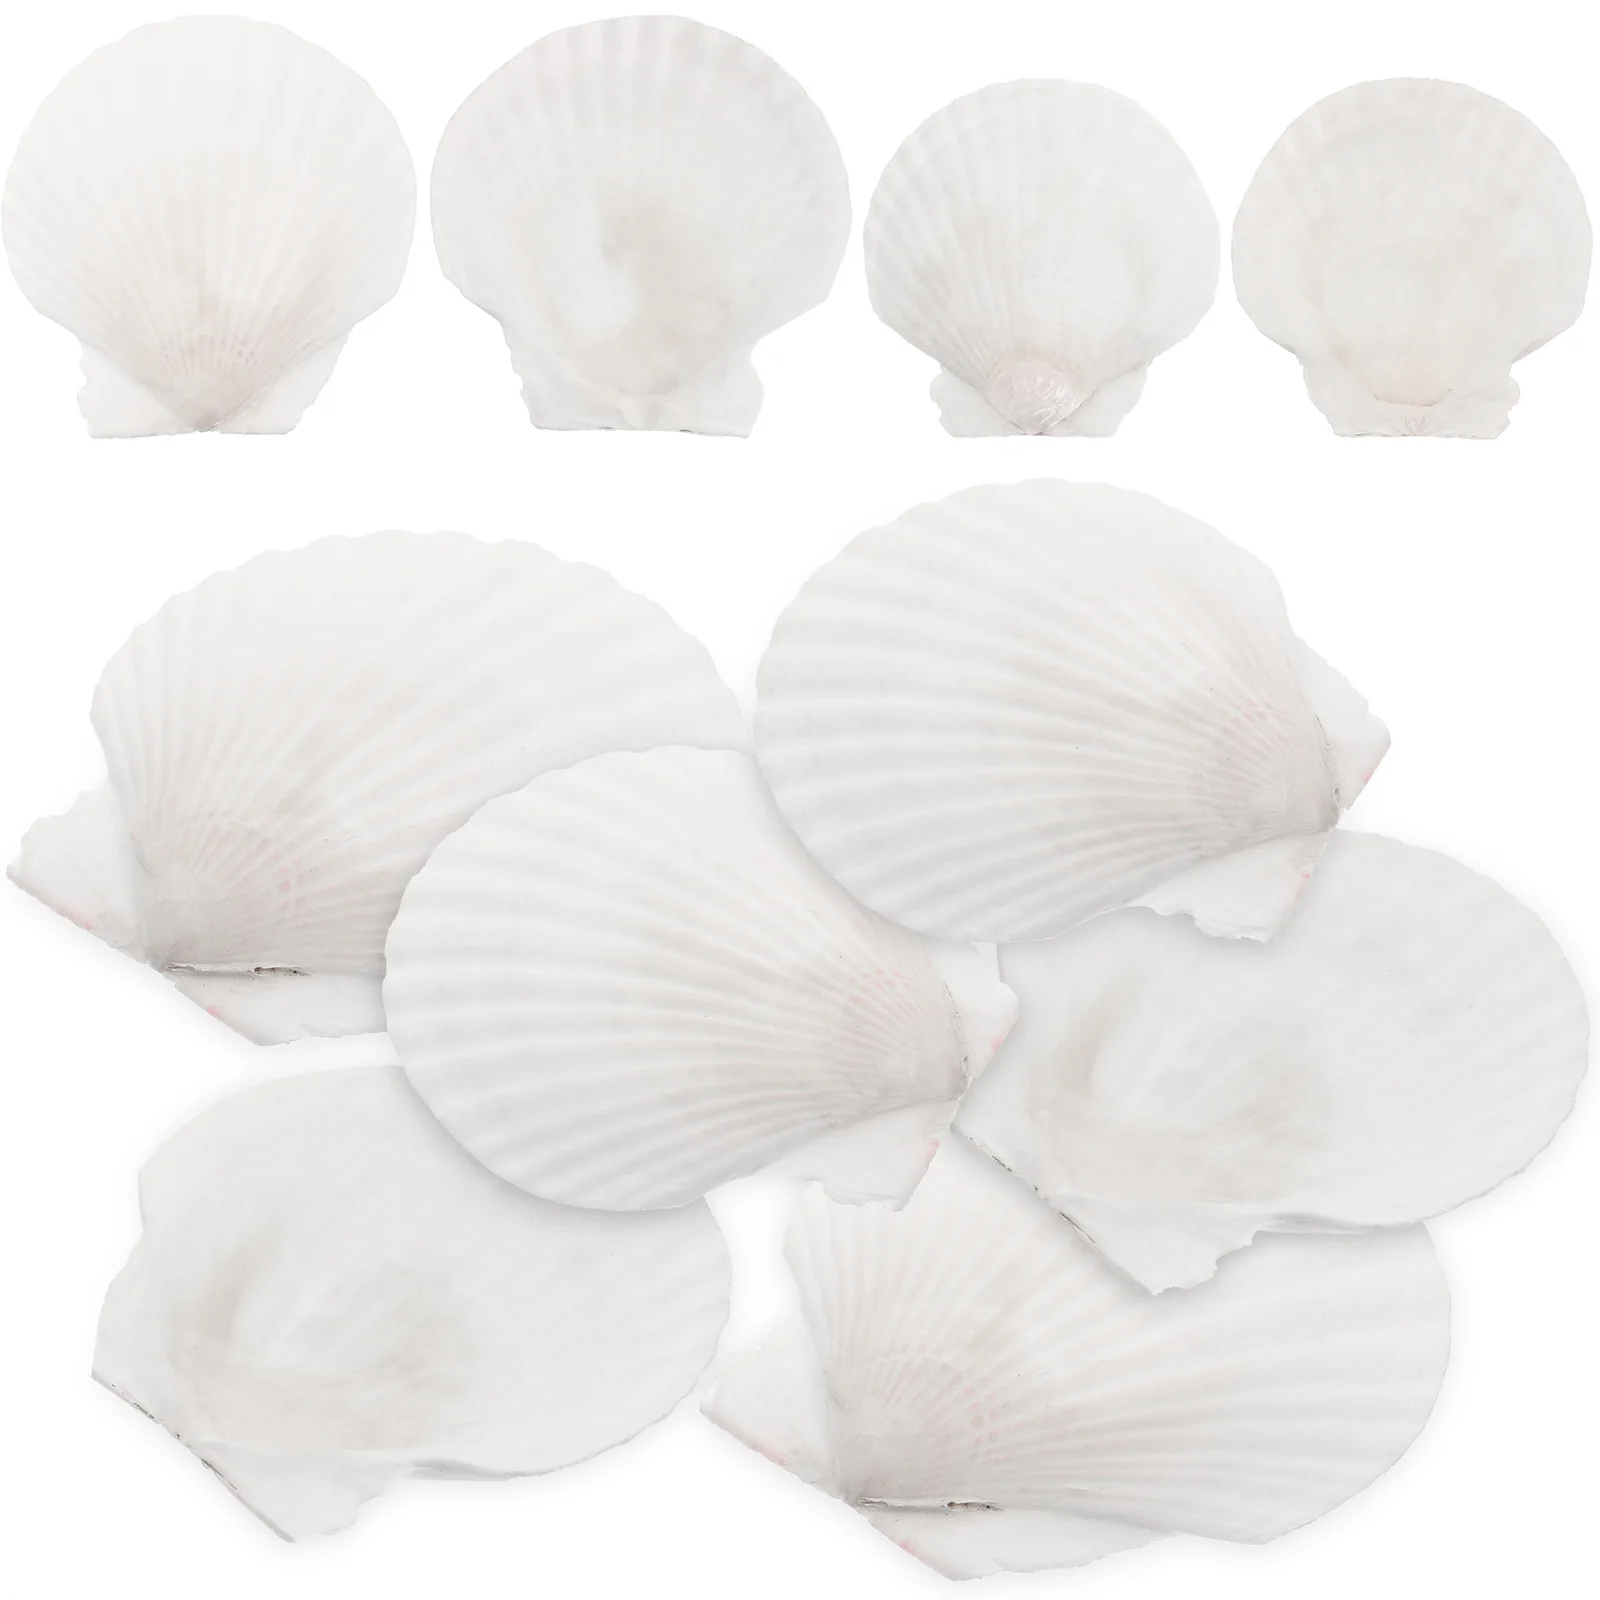 

10 Pcs Seashells Craft Charms Home Decoration Conch Shell Bead Christmas Tree Ornament Seashells Pendant Tabletop Accessories